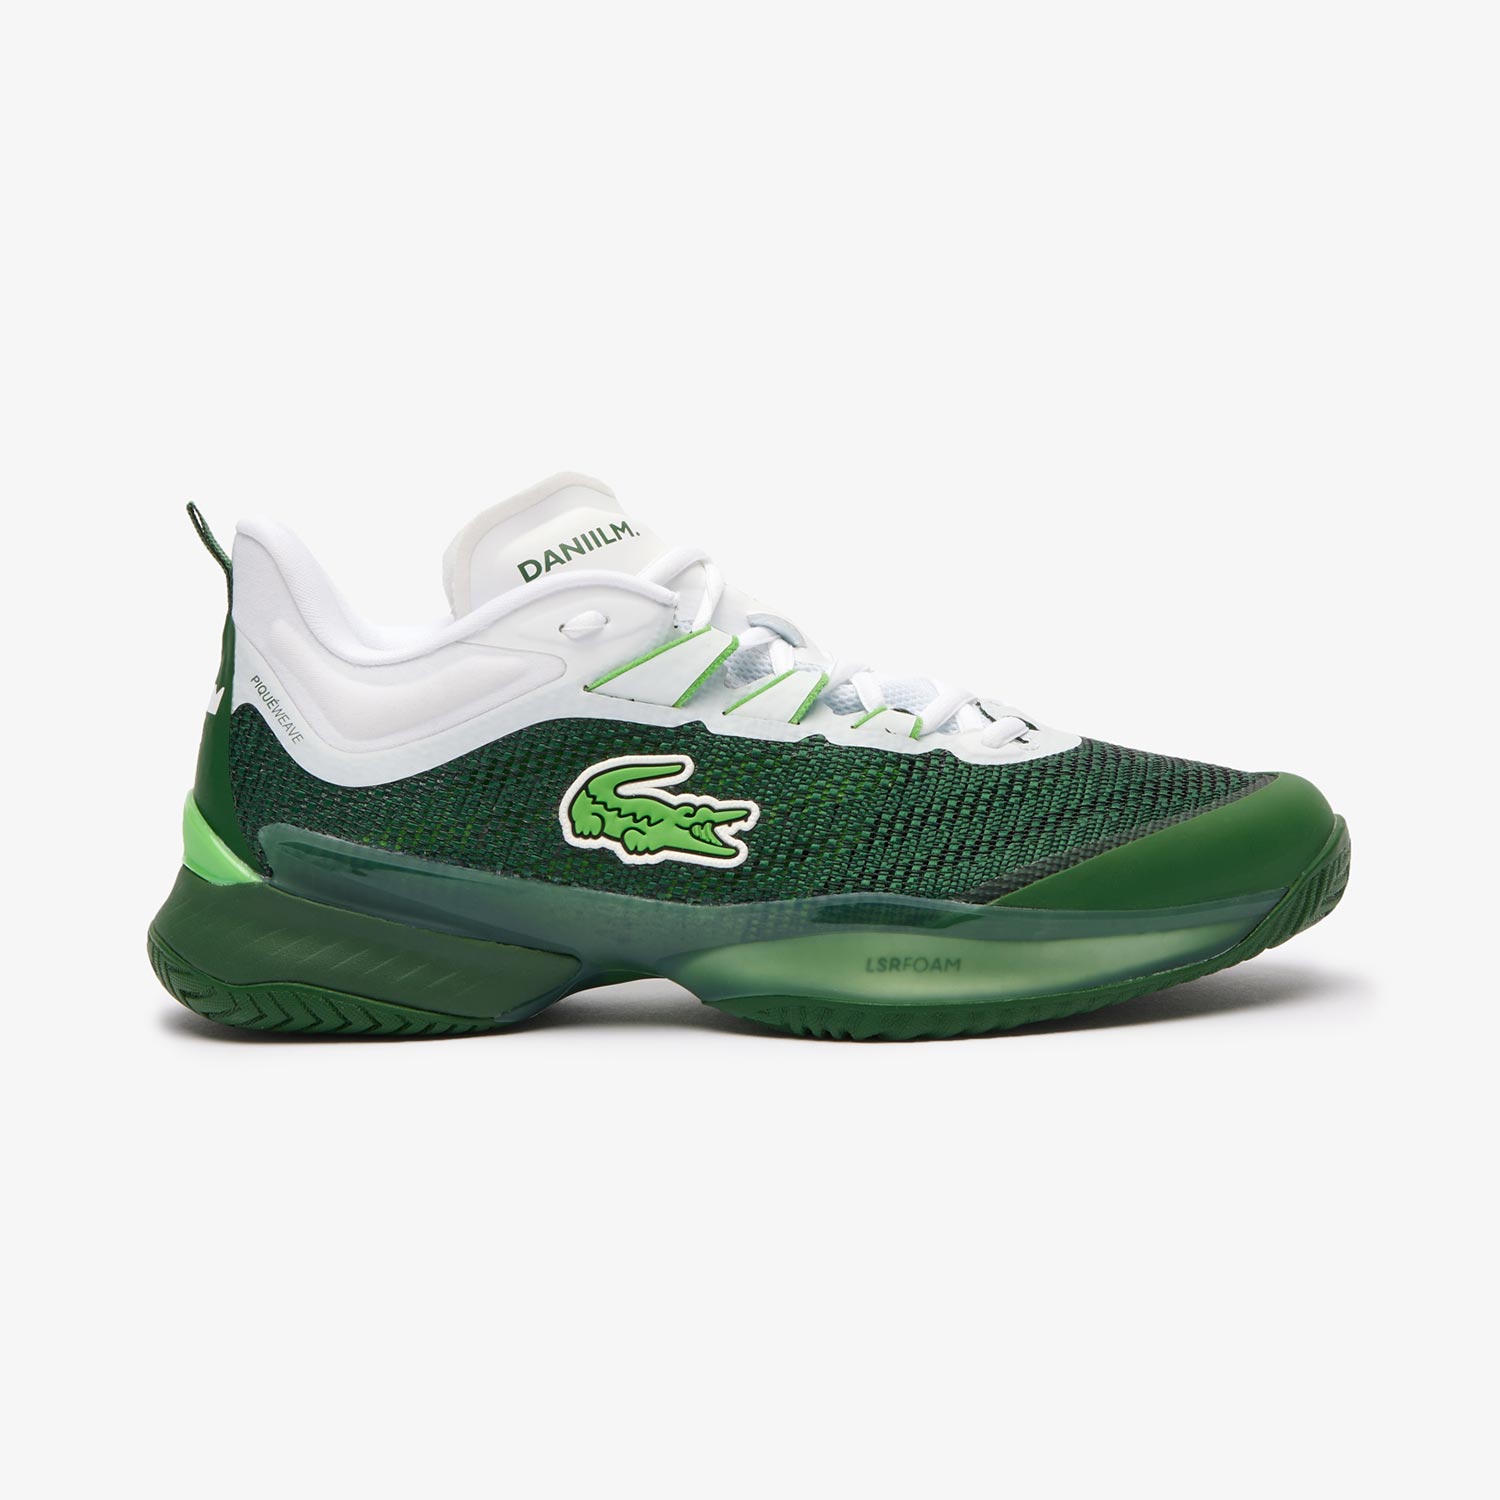 Lacoste AG-LT23 Ultra Men's Tennis Shoes - Green (1)